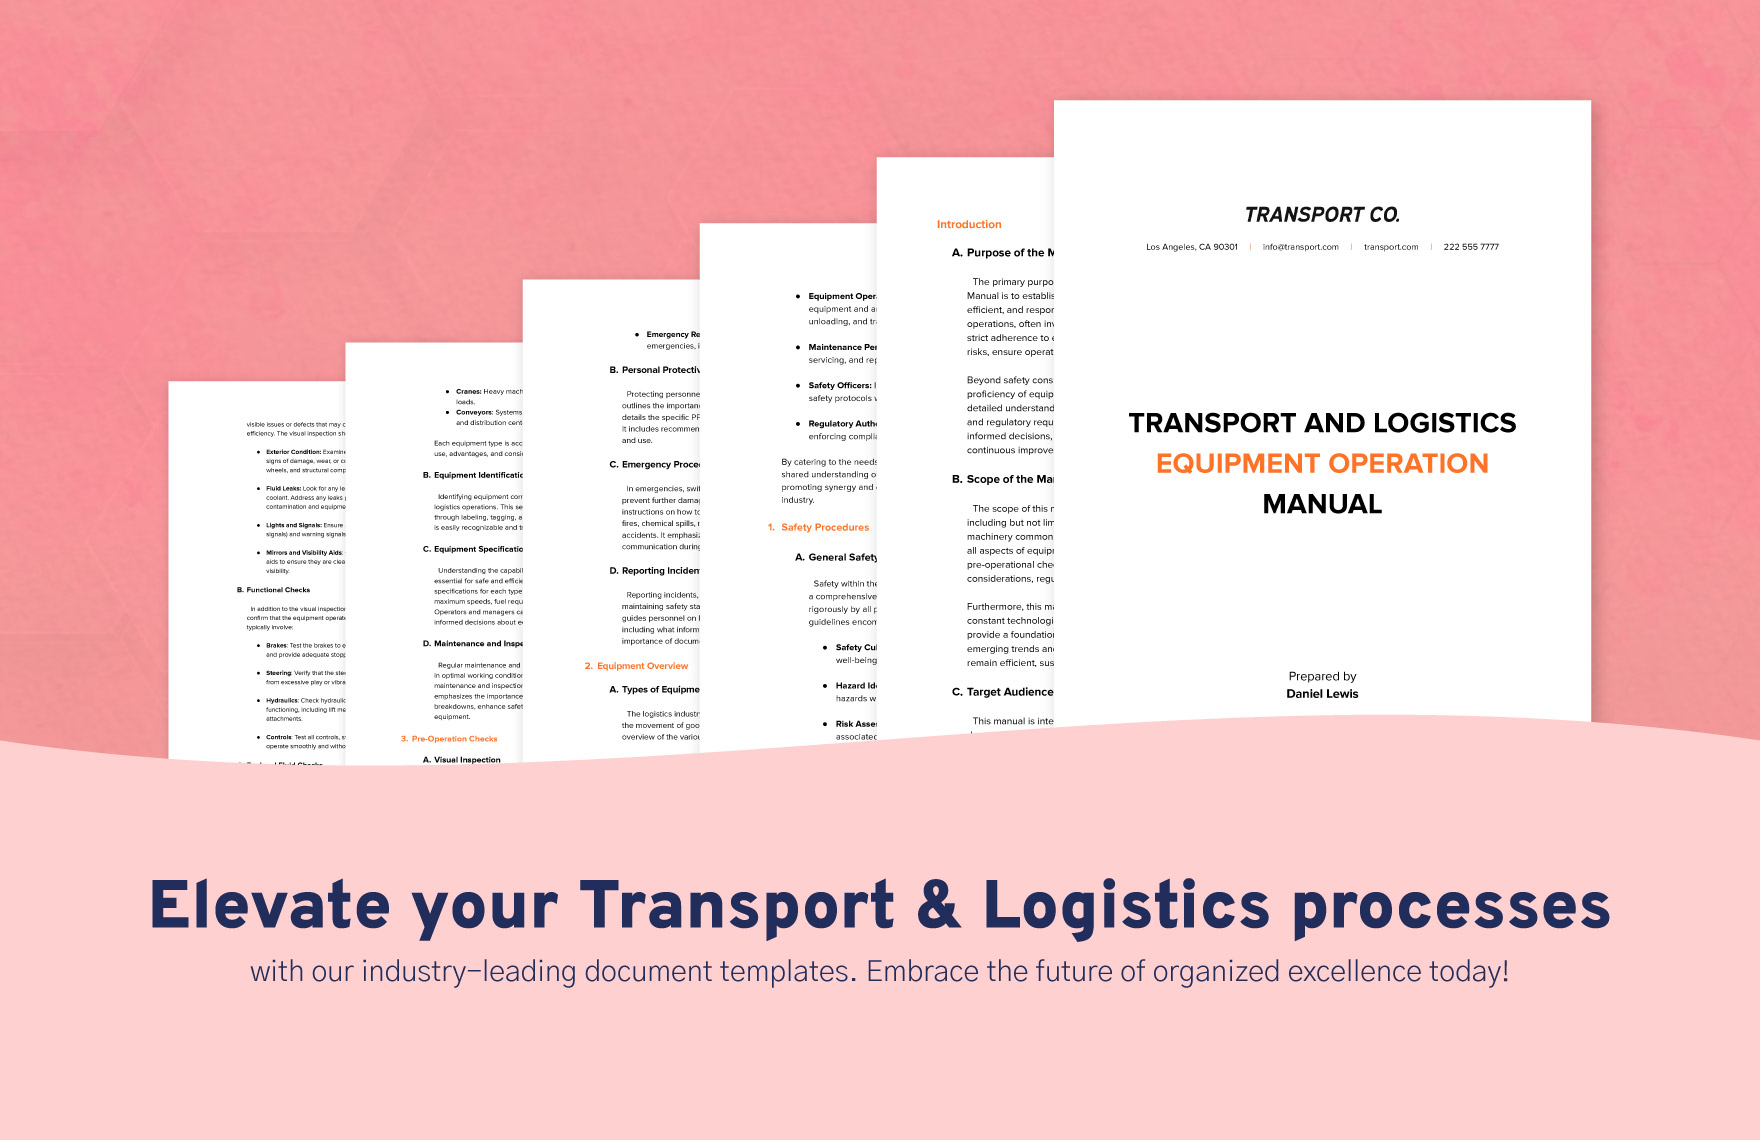 Transport and Logistics Equipment Operation Manual Template